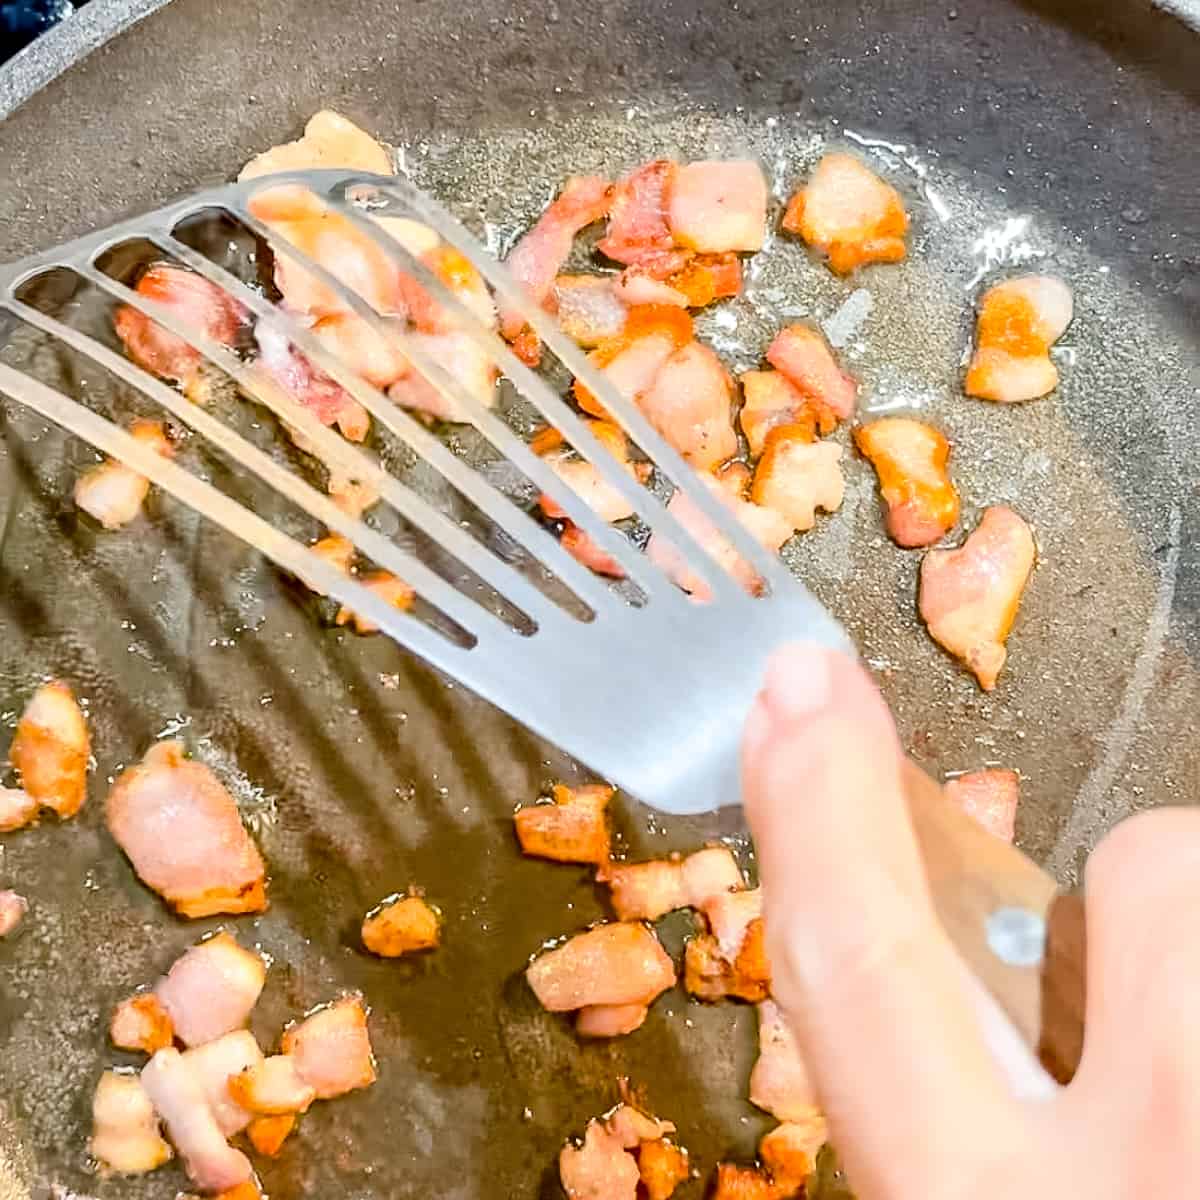 sauteing bacon in a nonstick pan.